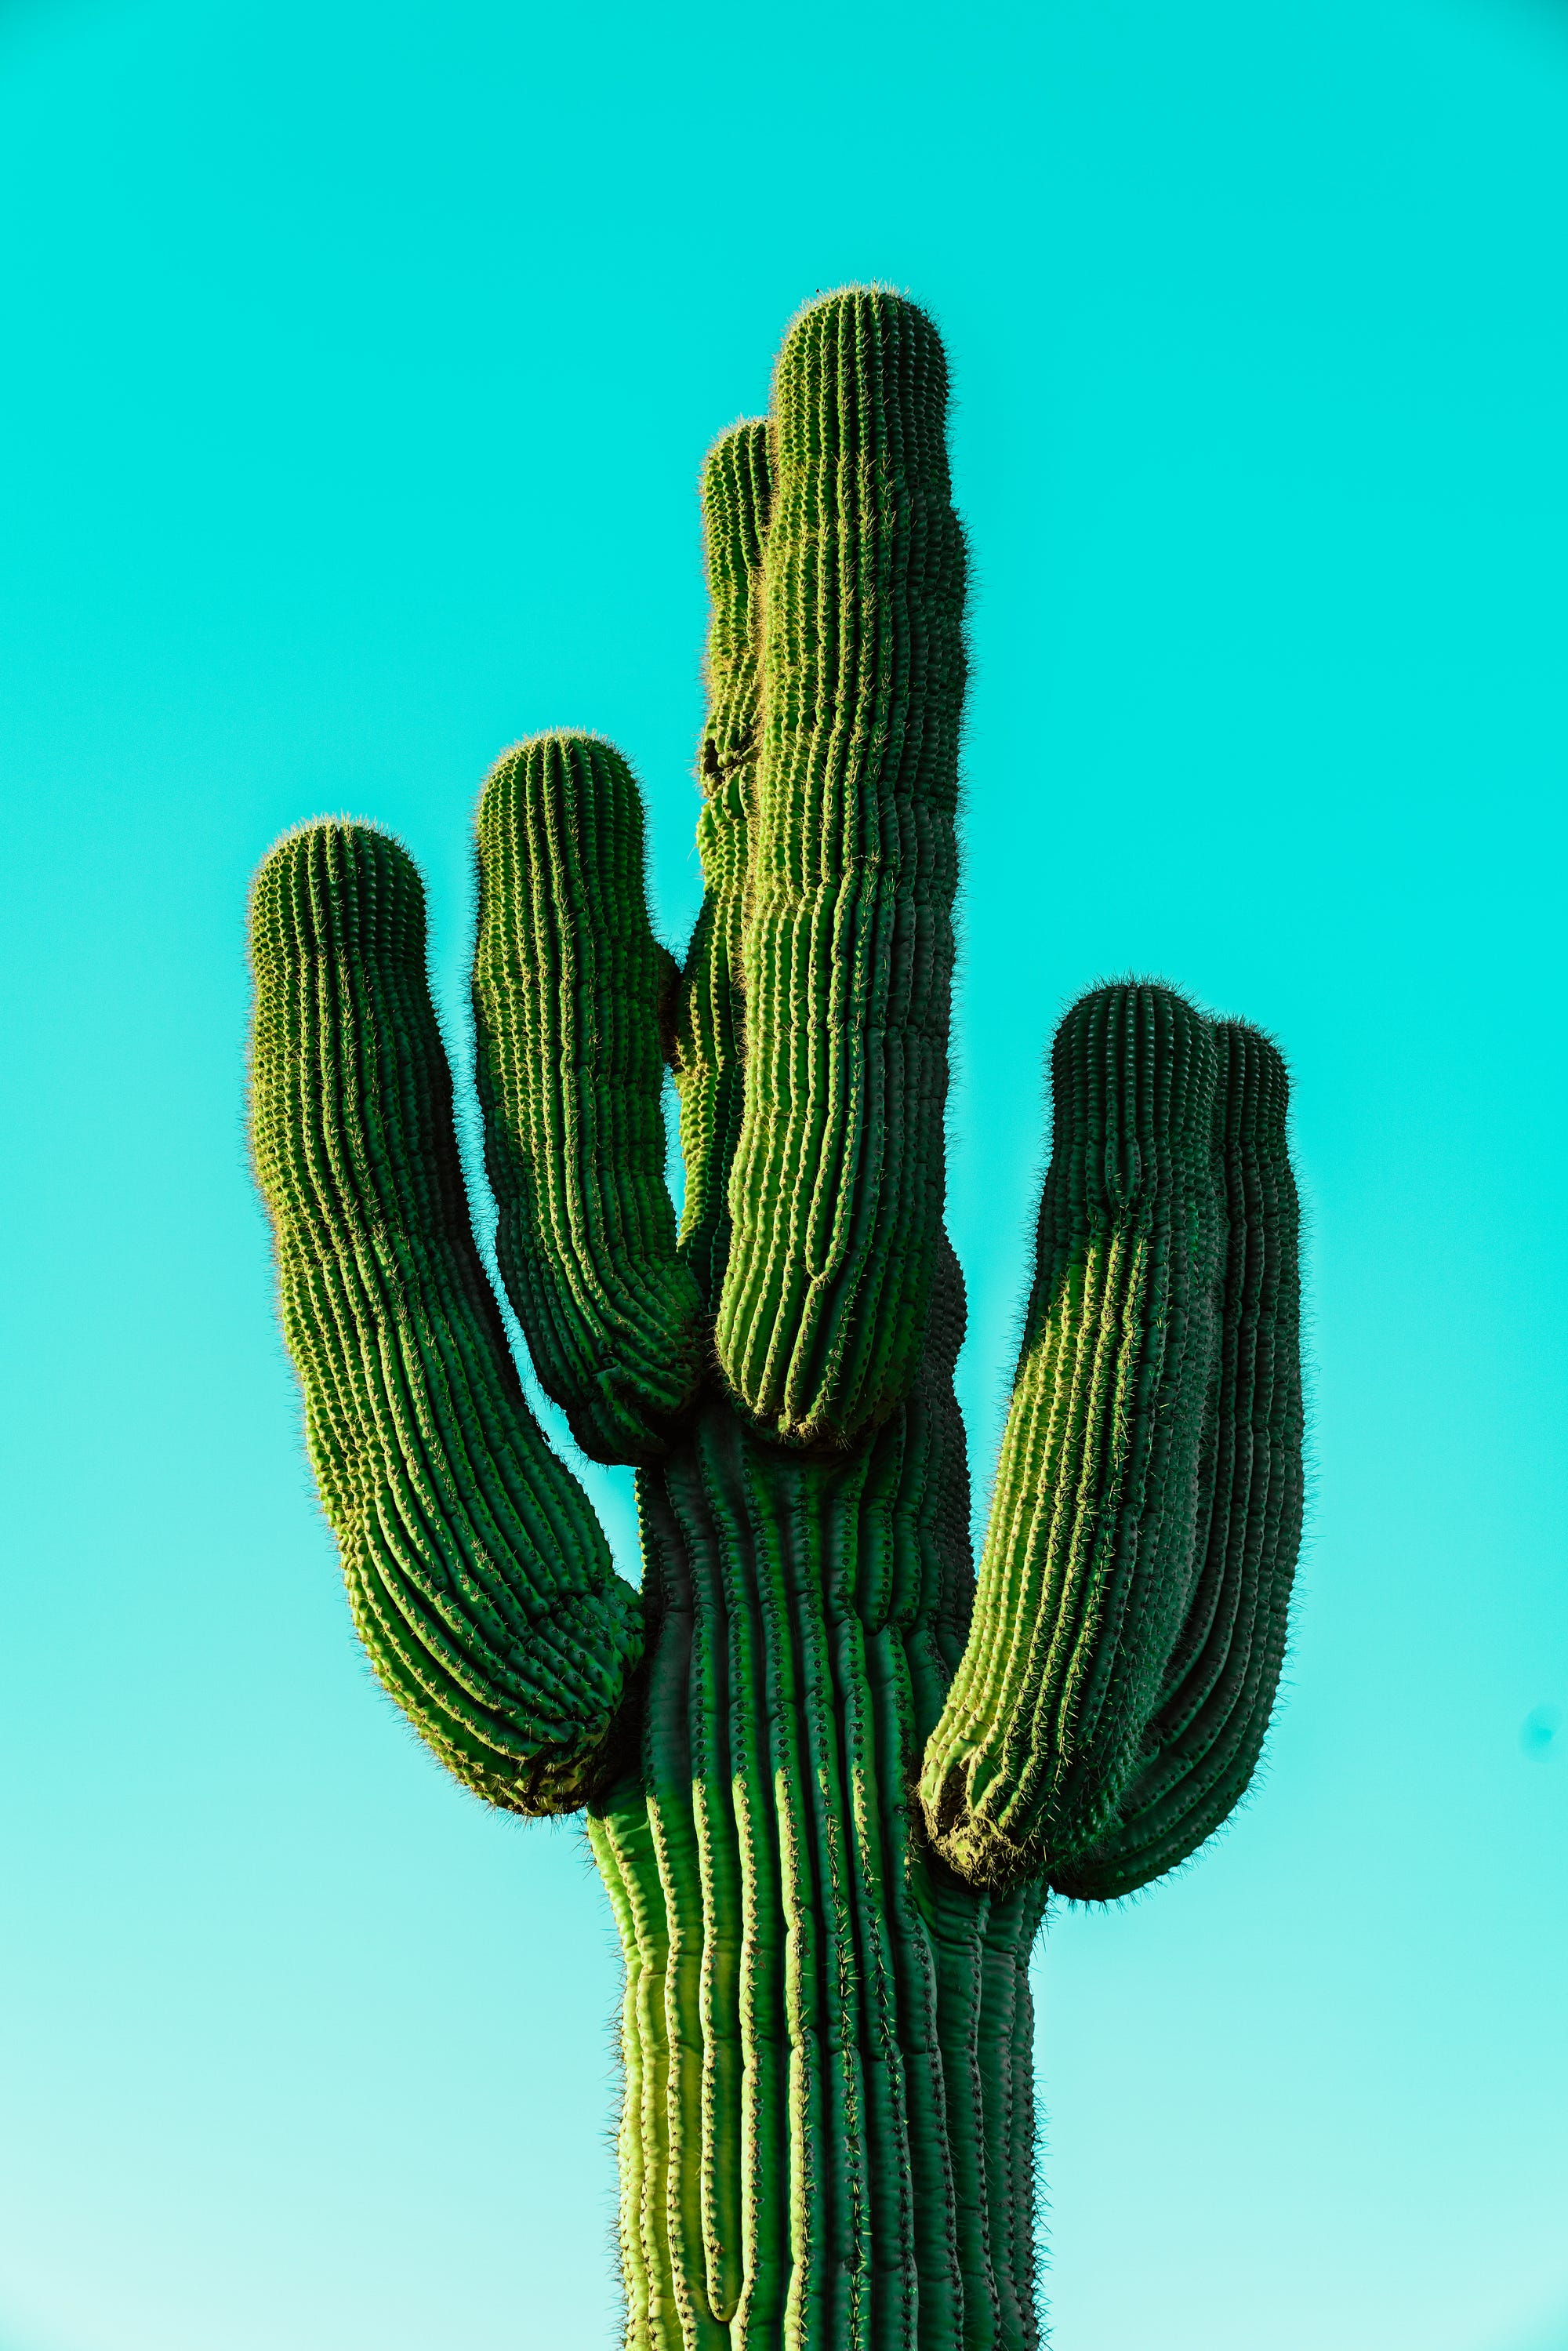 Death By Cactus